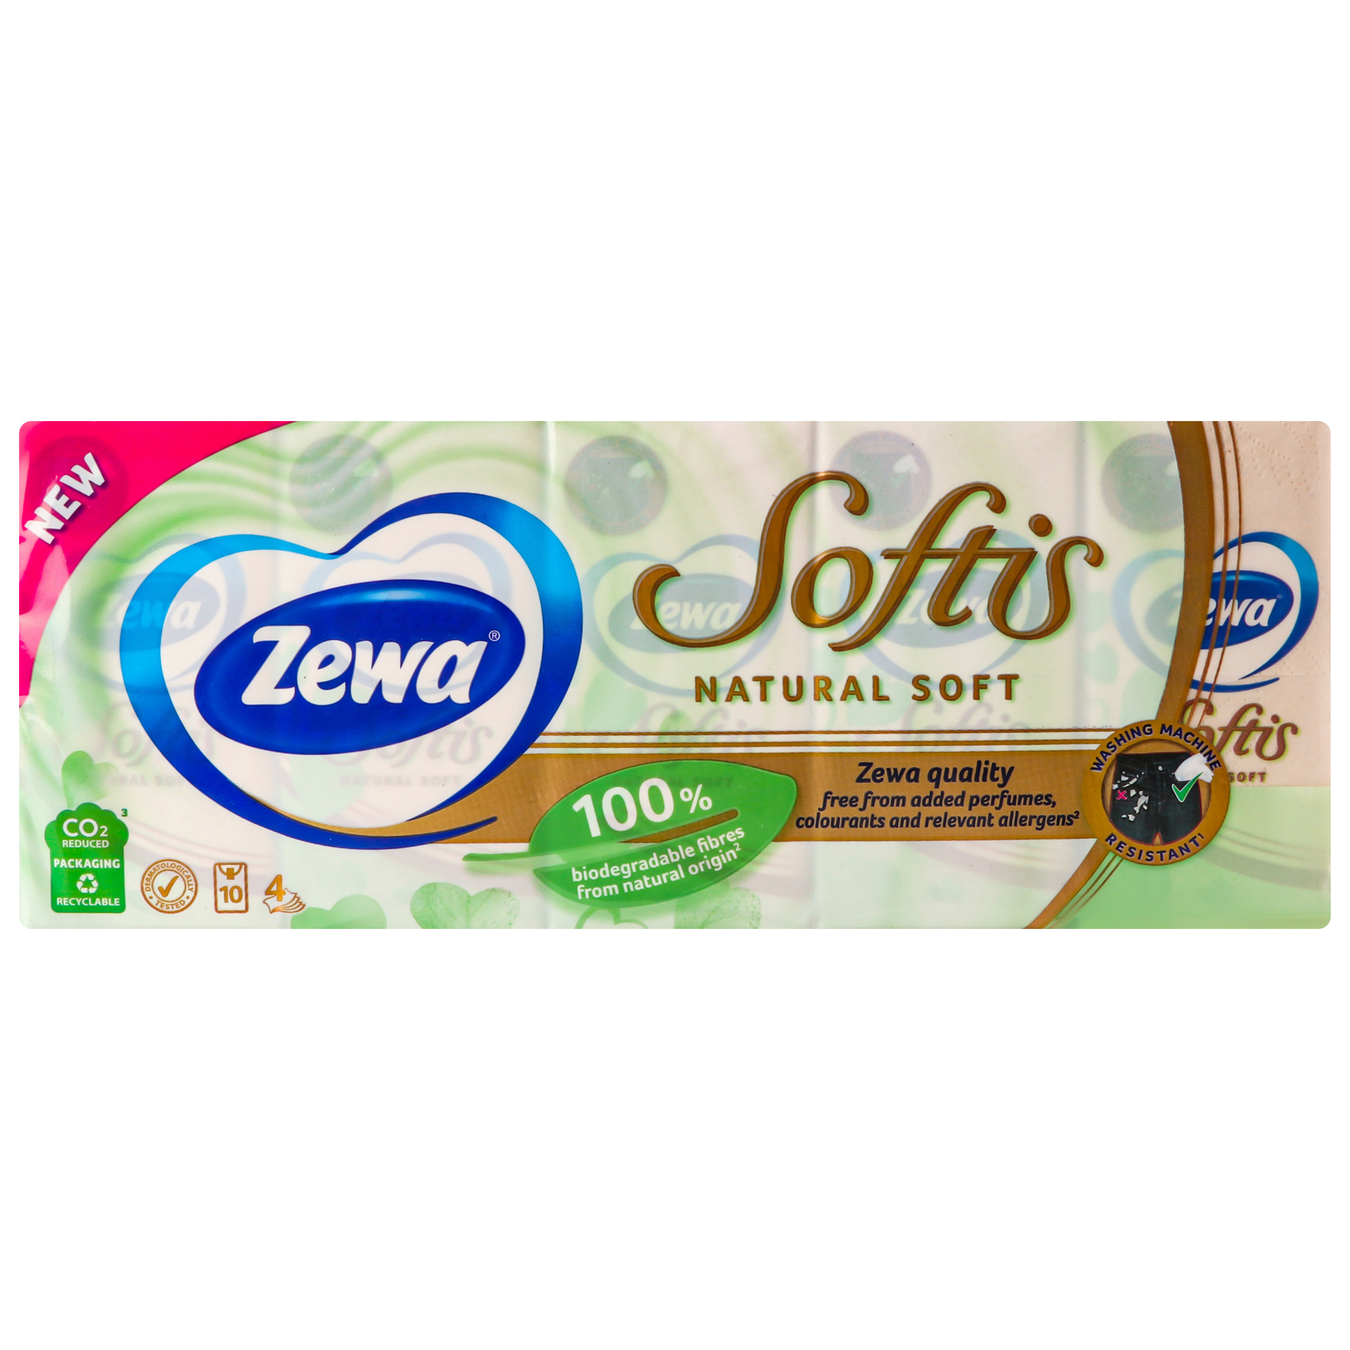 Zewa Softis Natural Soft handkerchiefs 10*9 pcs